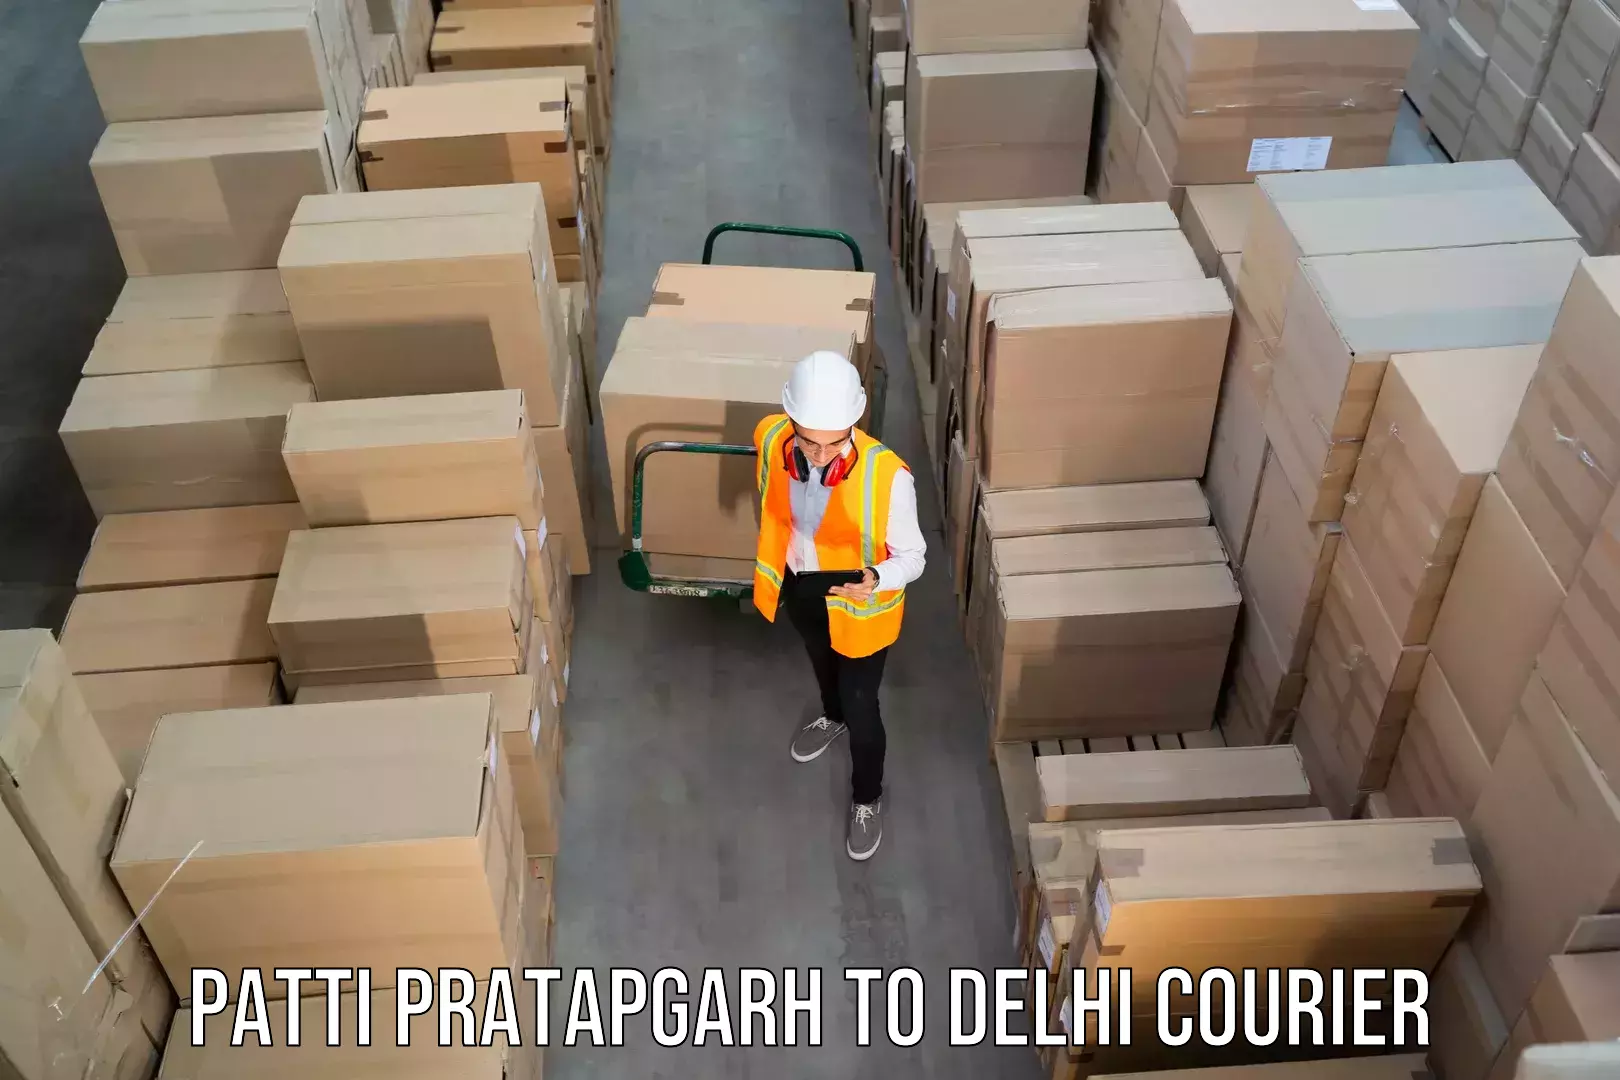 Express shipping Patti Pratapgarh to Delhi